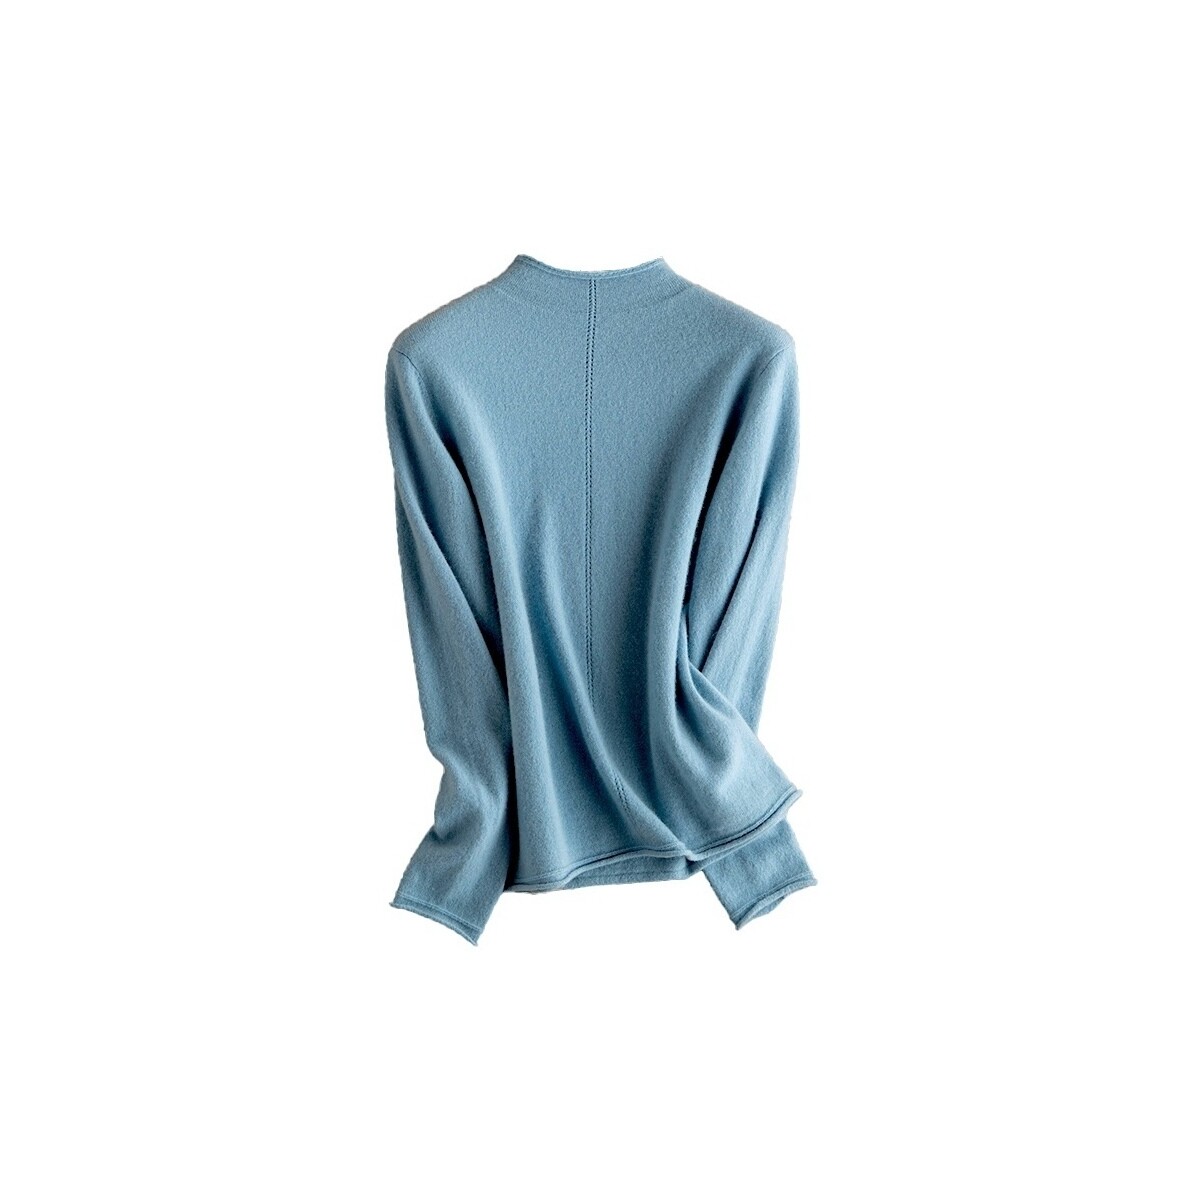 Vêtements Femme Pulls Chikooparis Pull 100% pur cachemire - Bleu Bleu